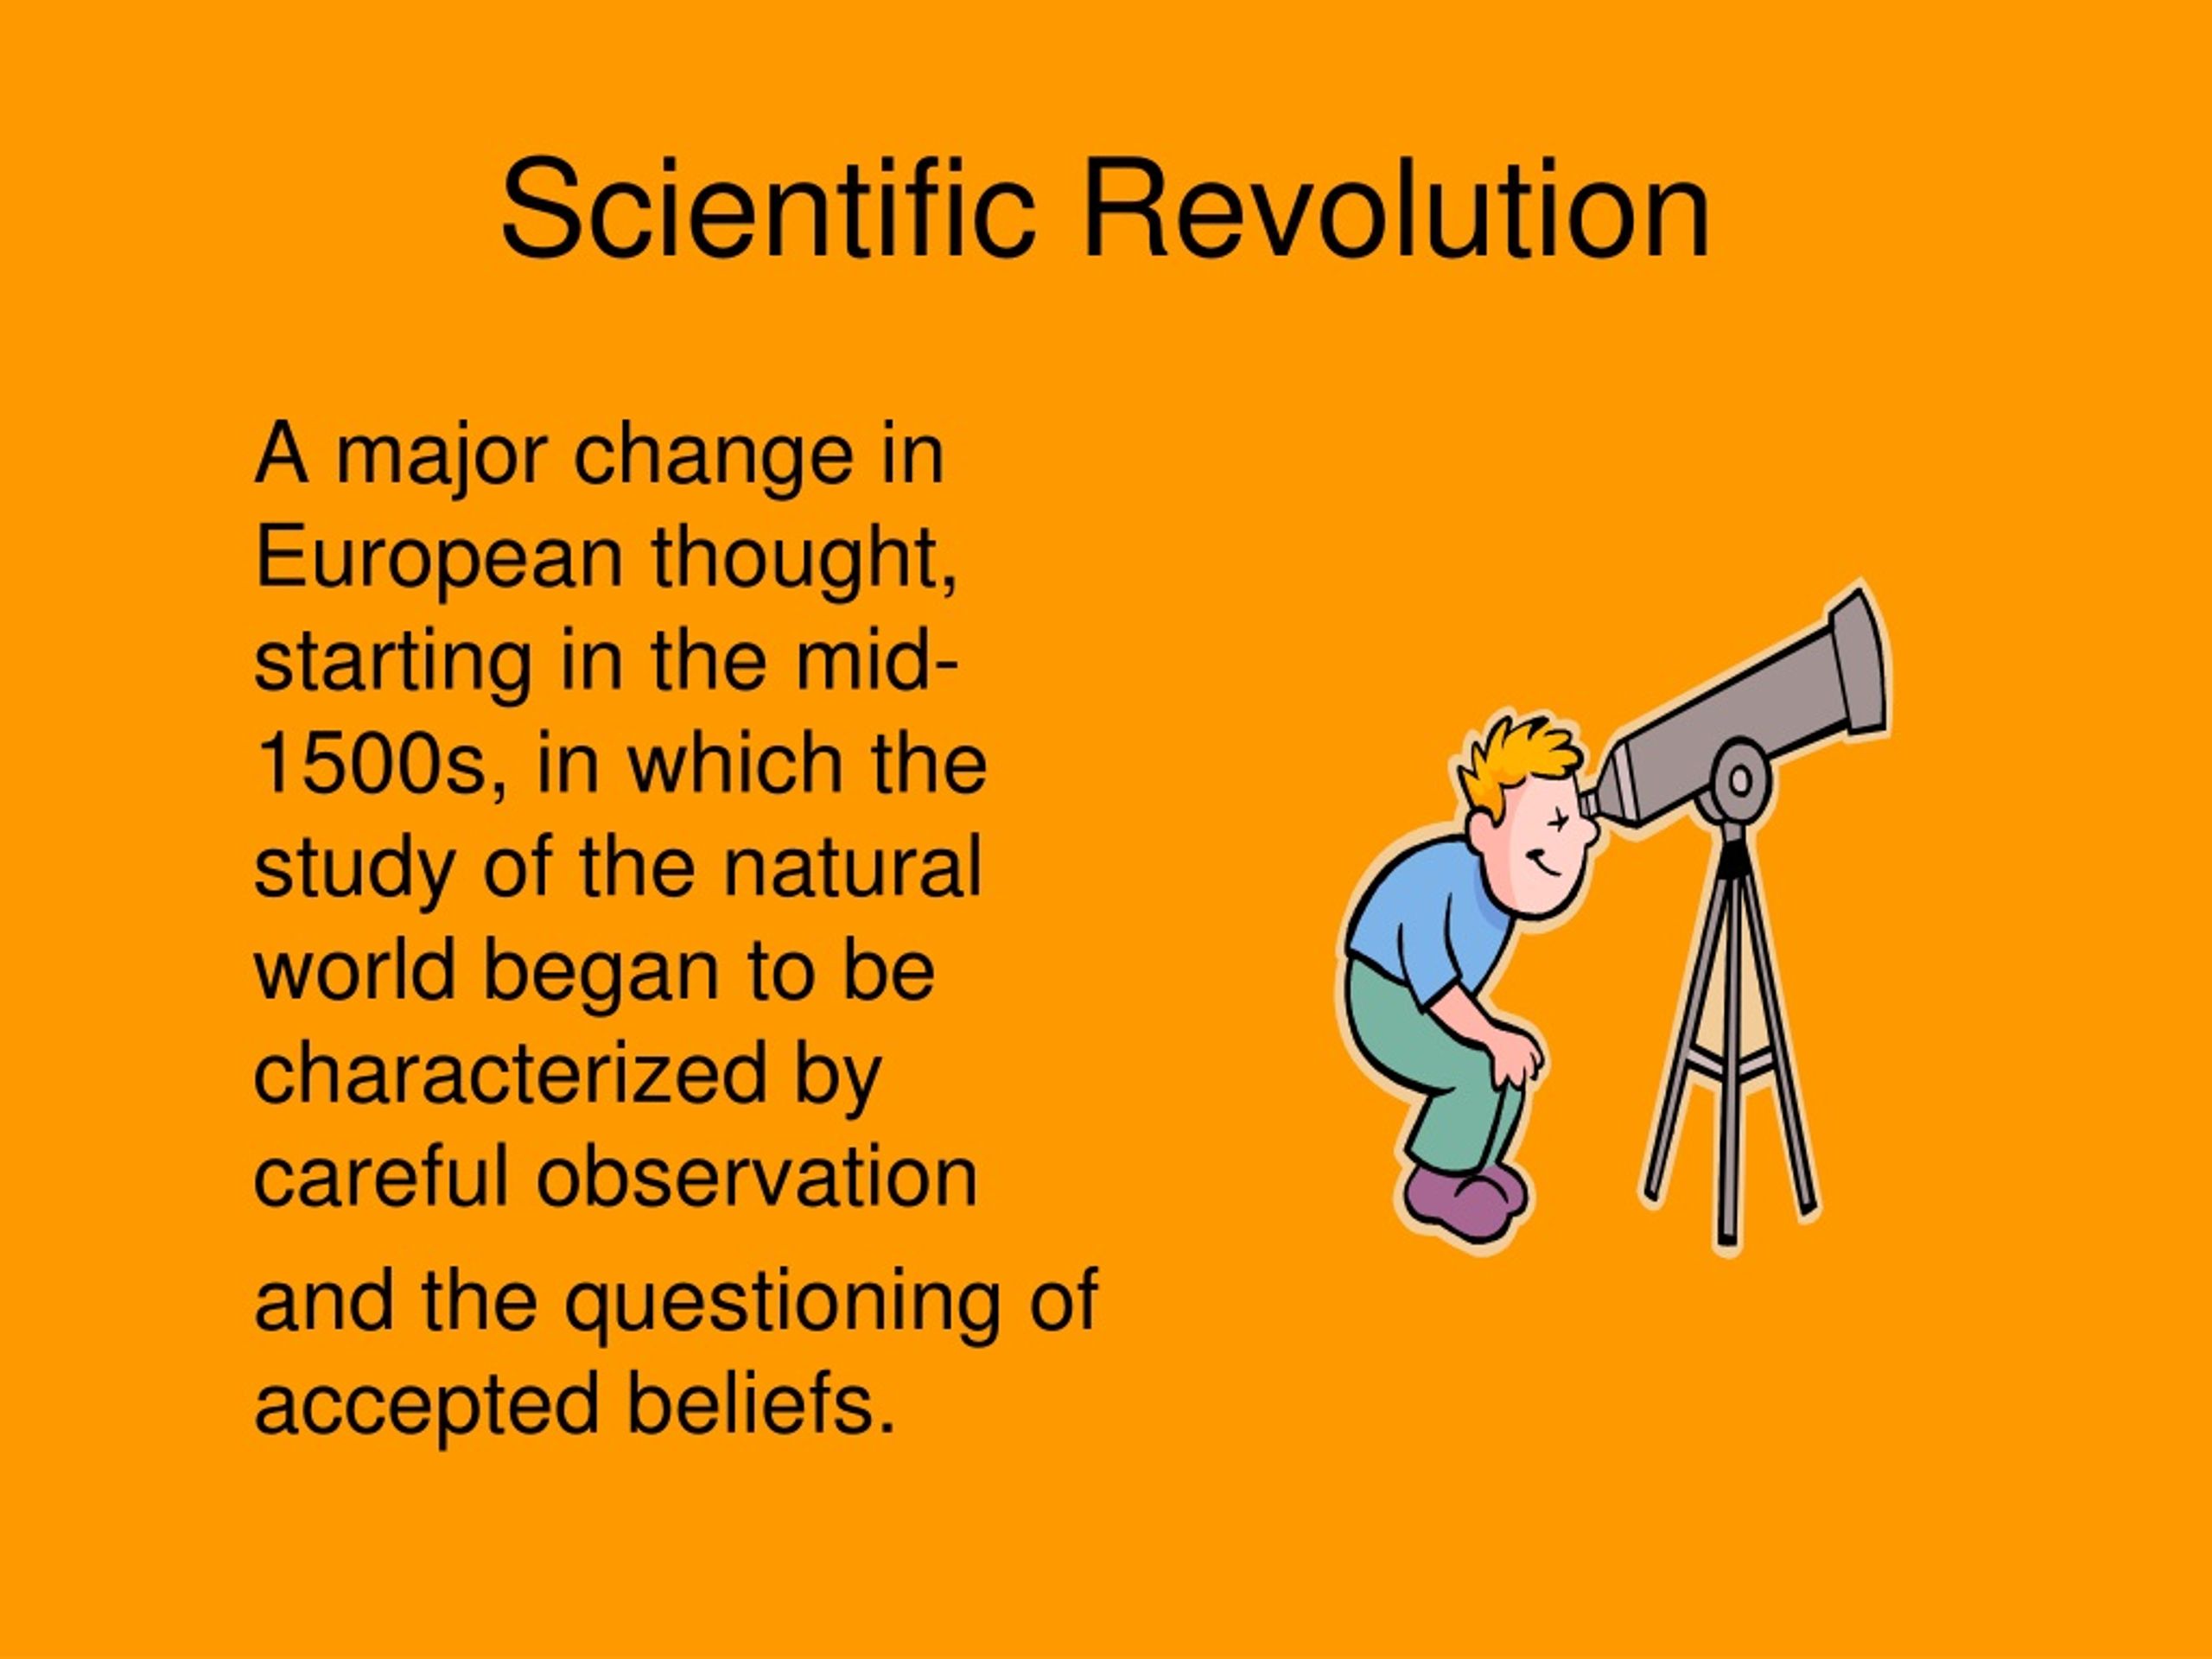 scientific revolution meaning essay